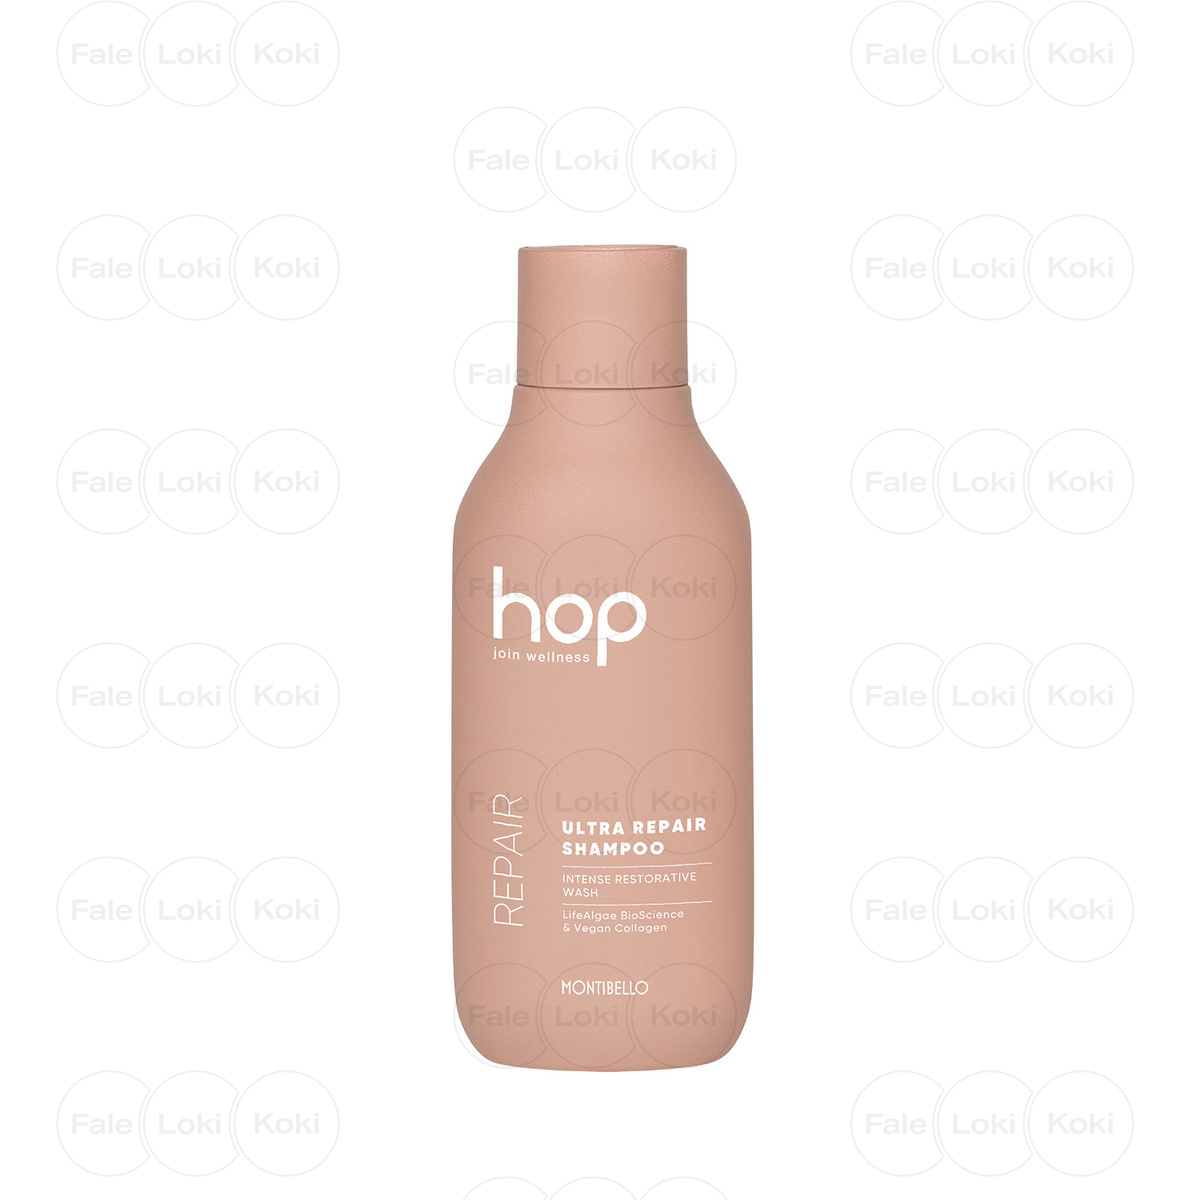 MONTIBELLO HOP szampon do włosów Ultra Repair Shampoo 300 ml